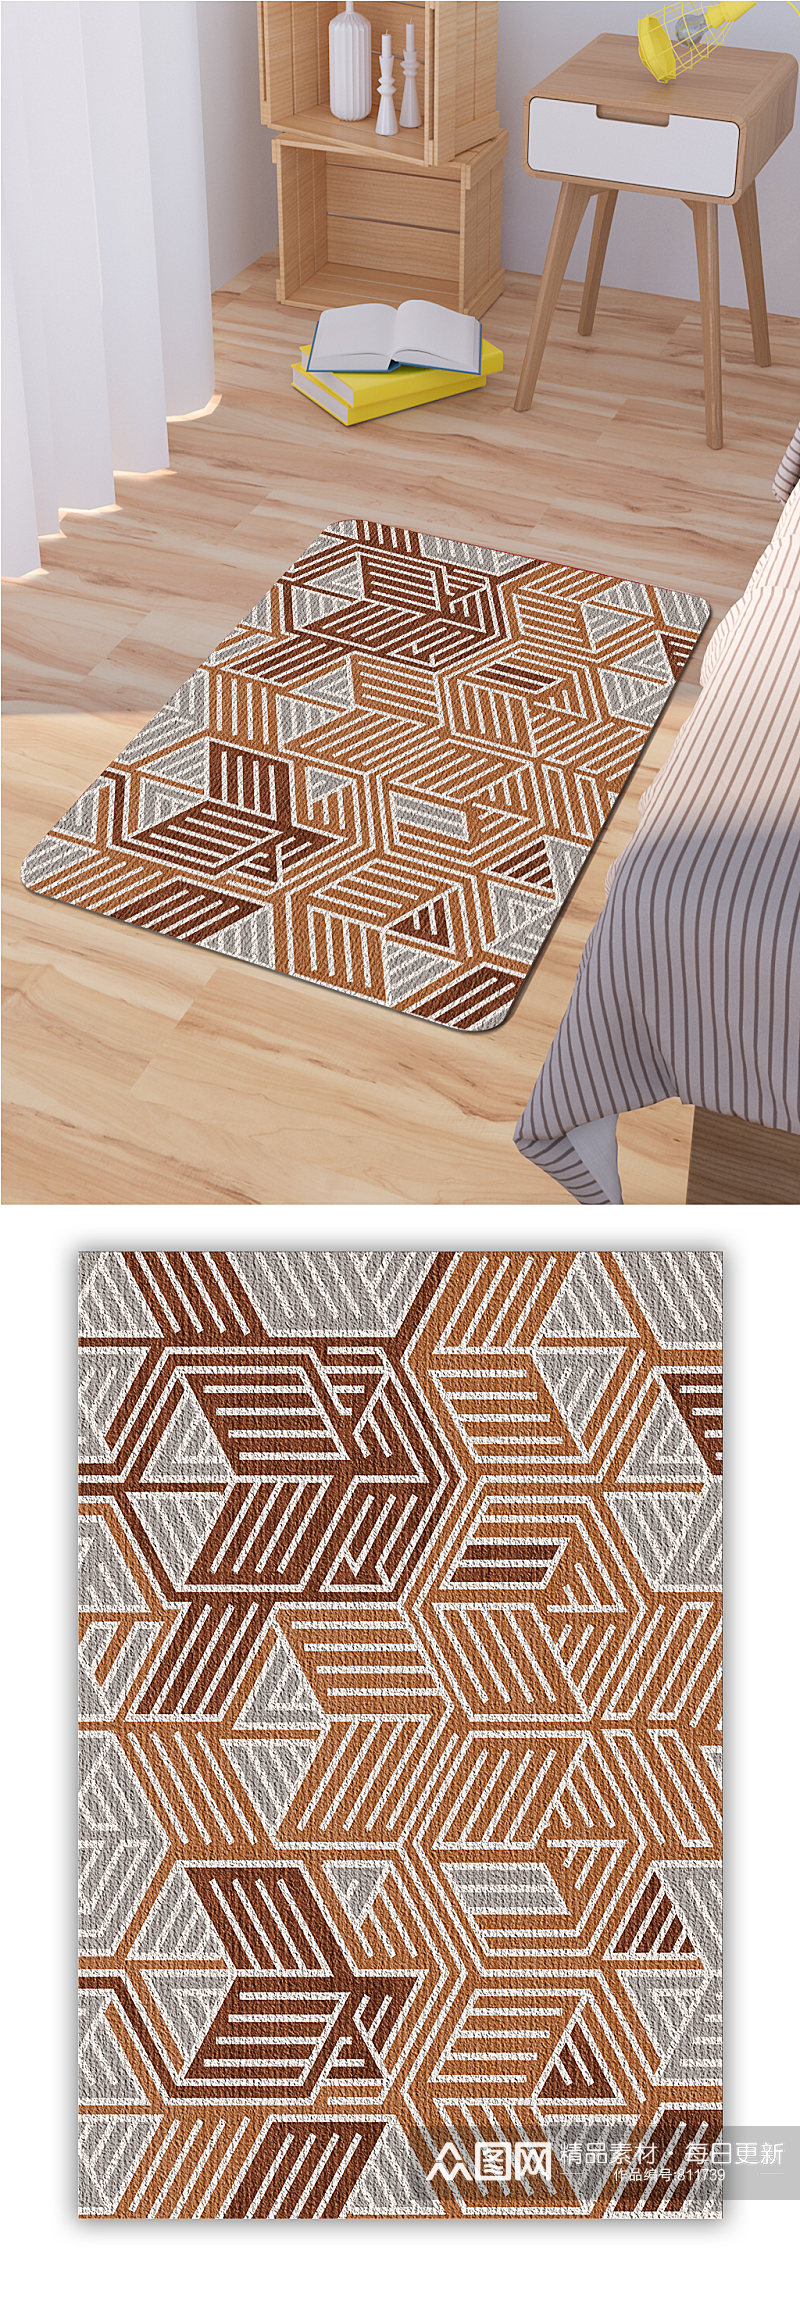 床边地毯撞色块地毯素材